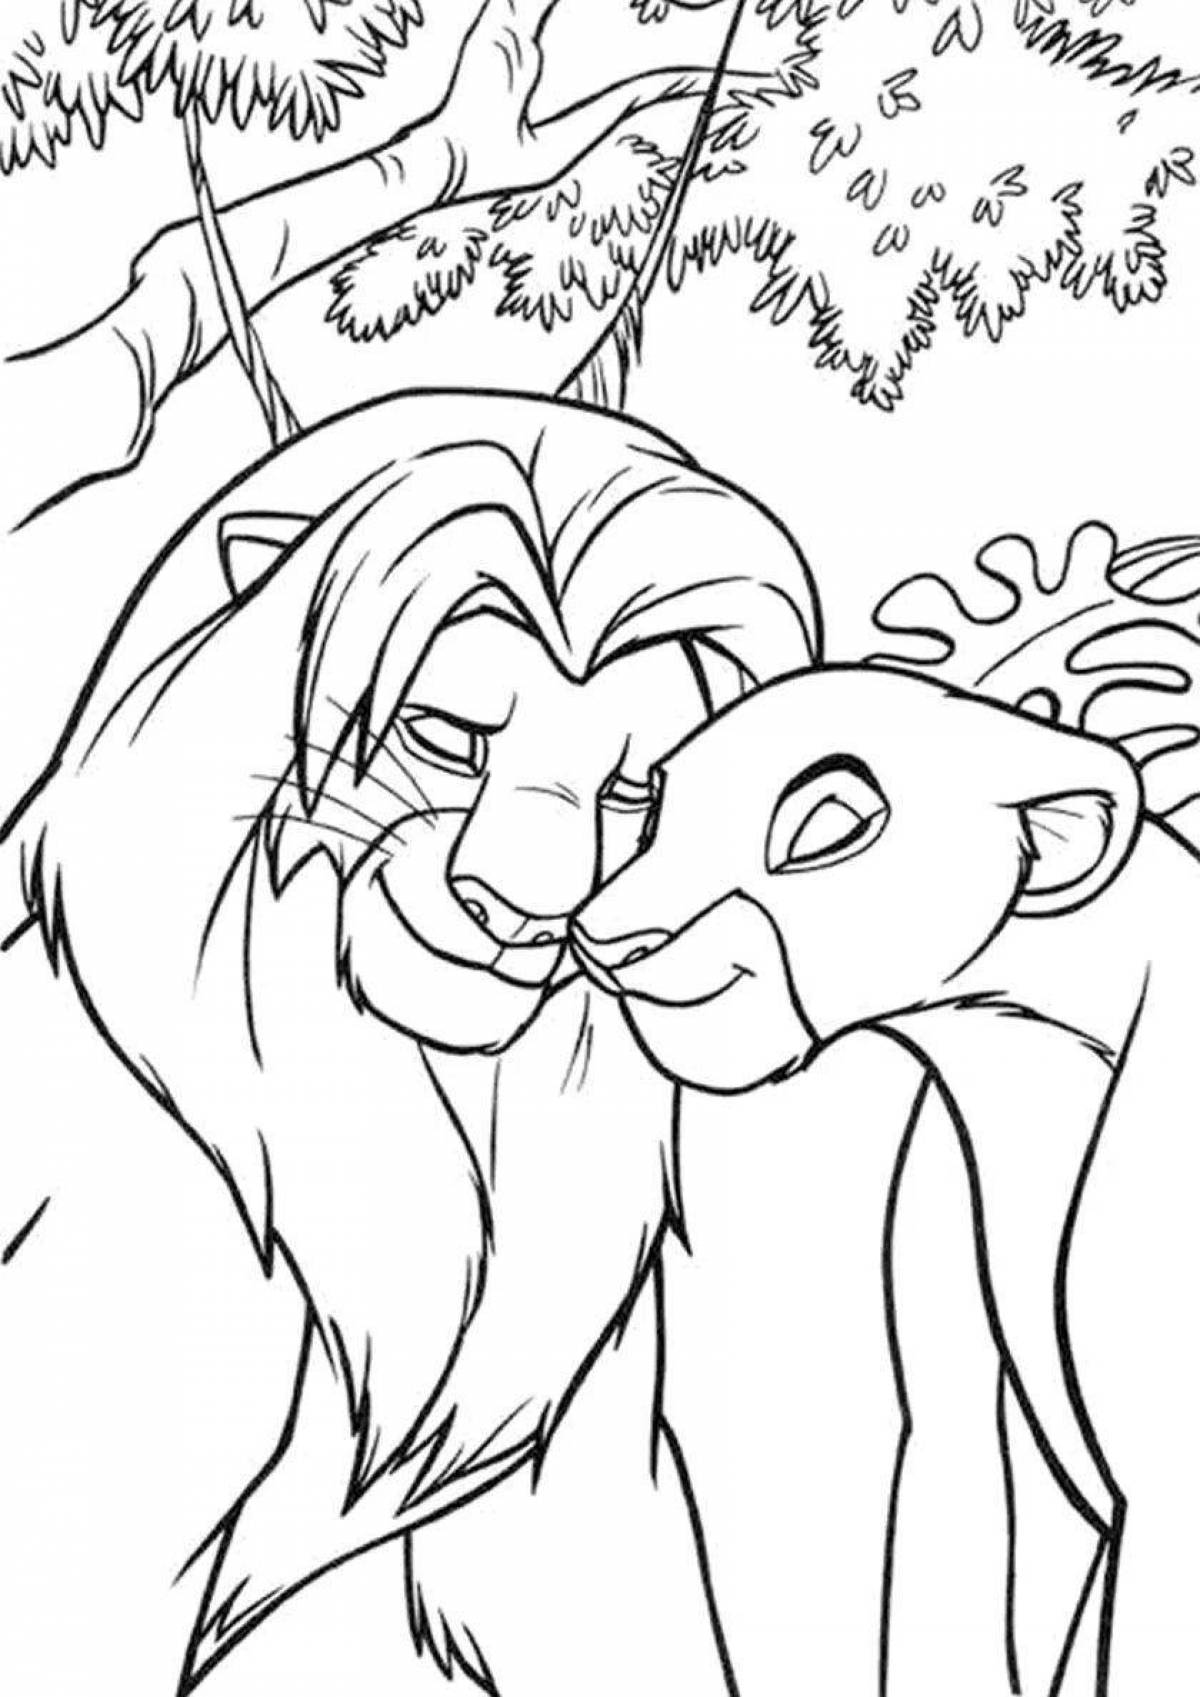 Simba and nala cute coloring page